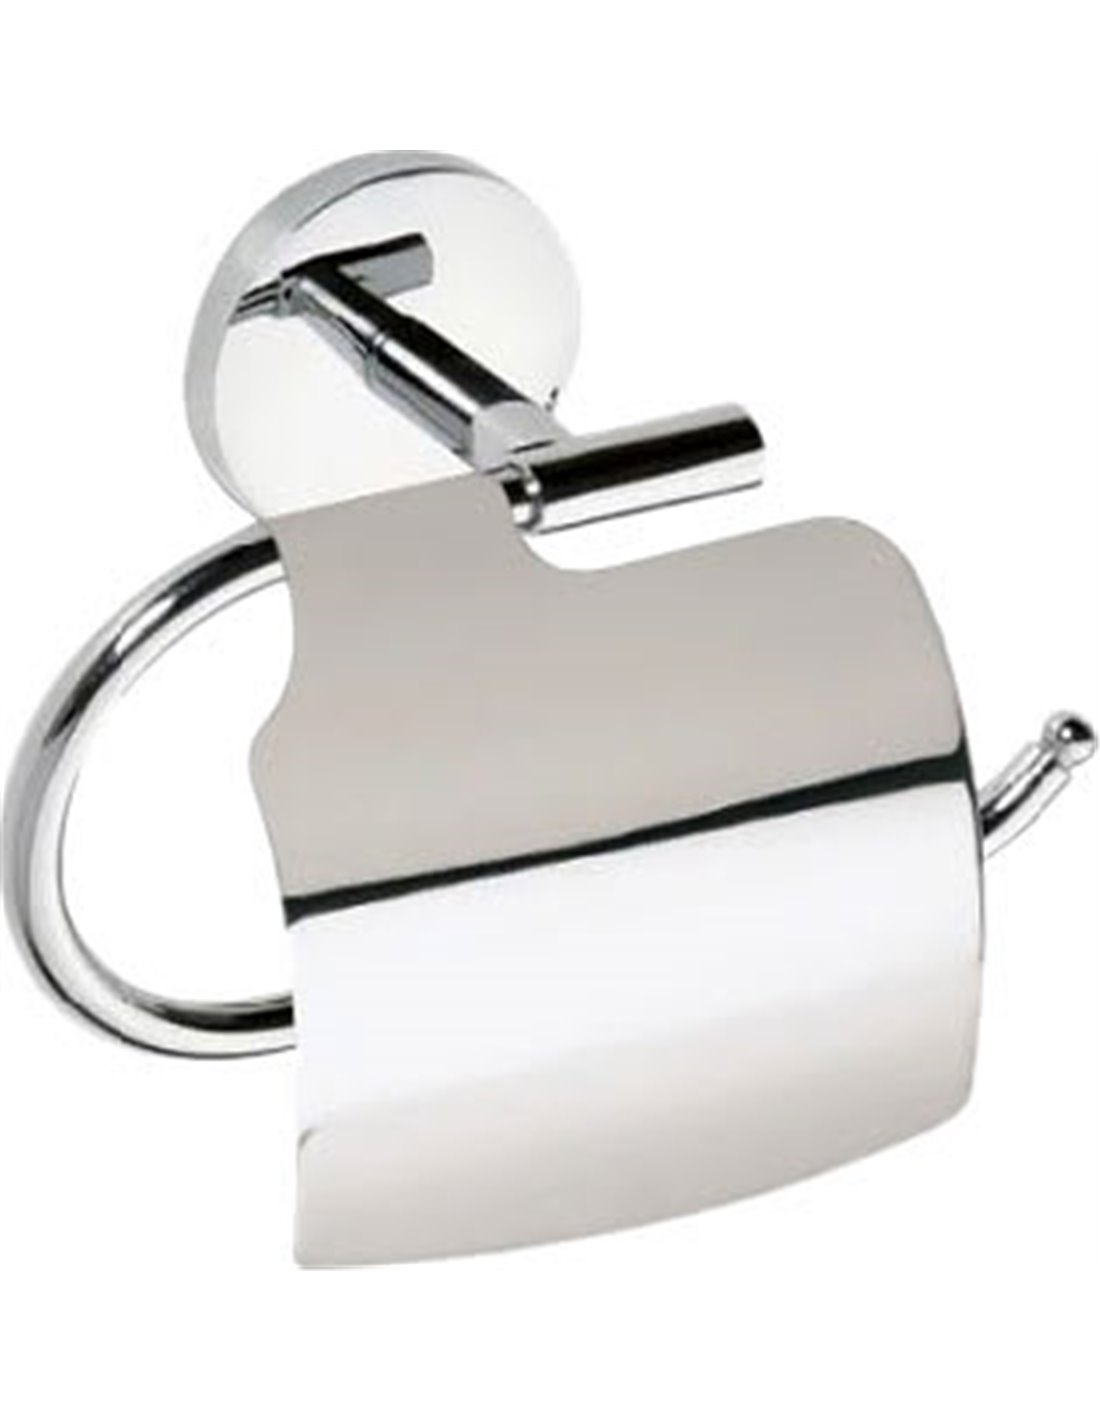 Bemeta Toilet Paper Holder Alfa 102412012 ▫